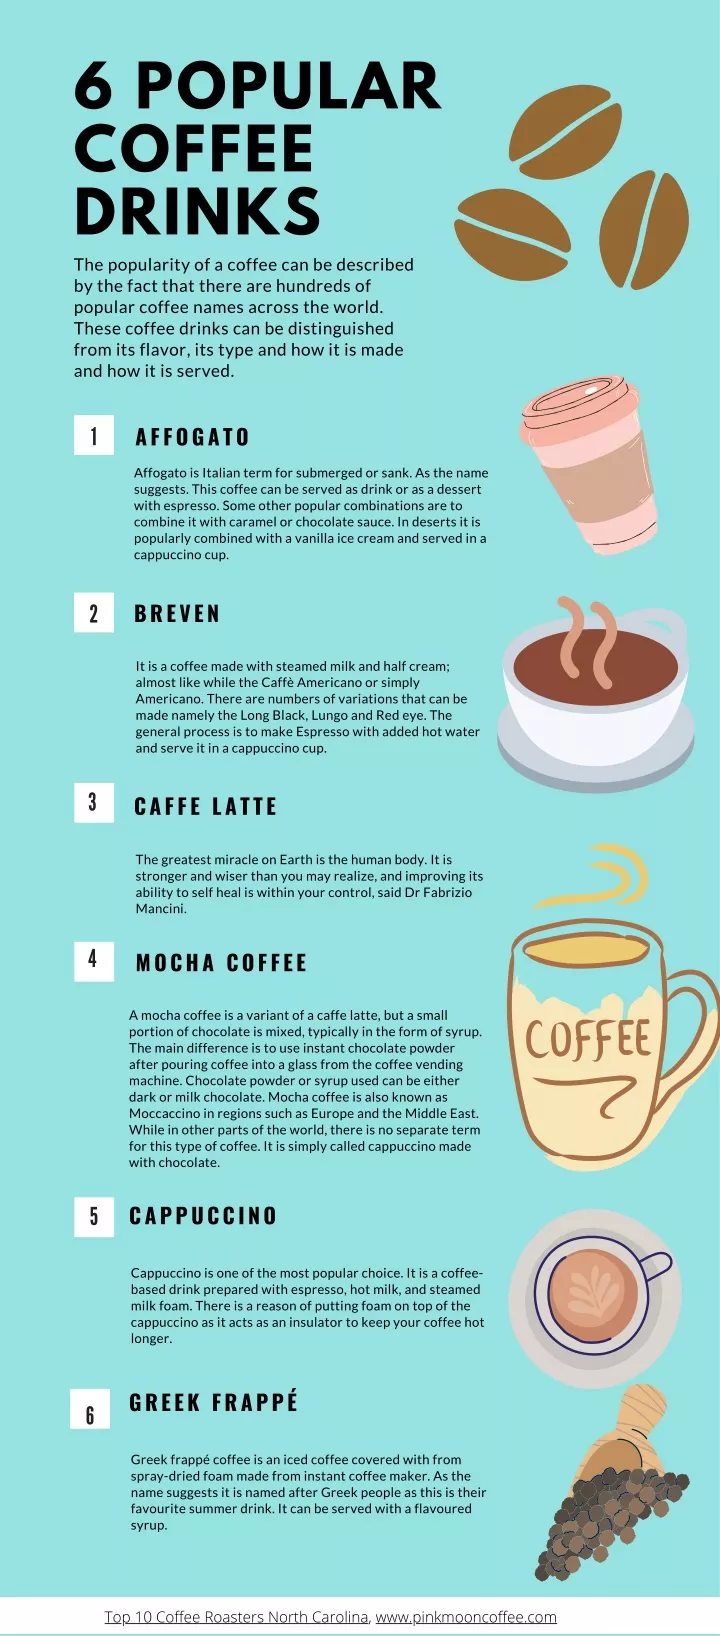 6 popular coffee drinks